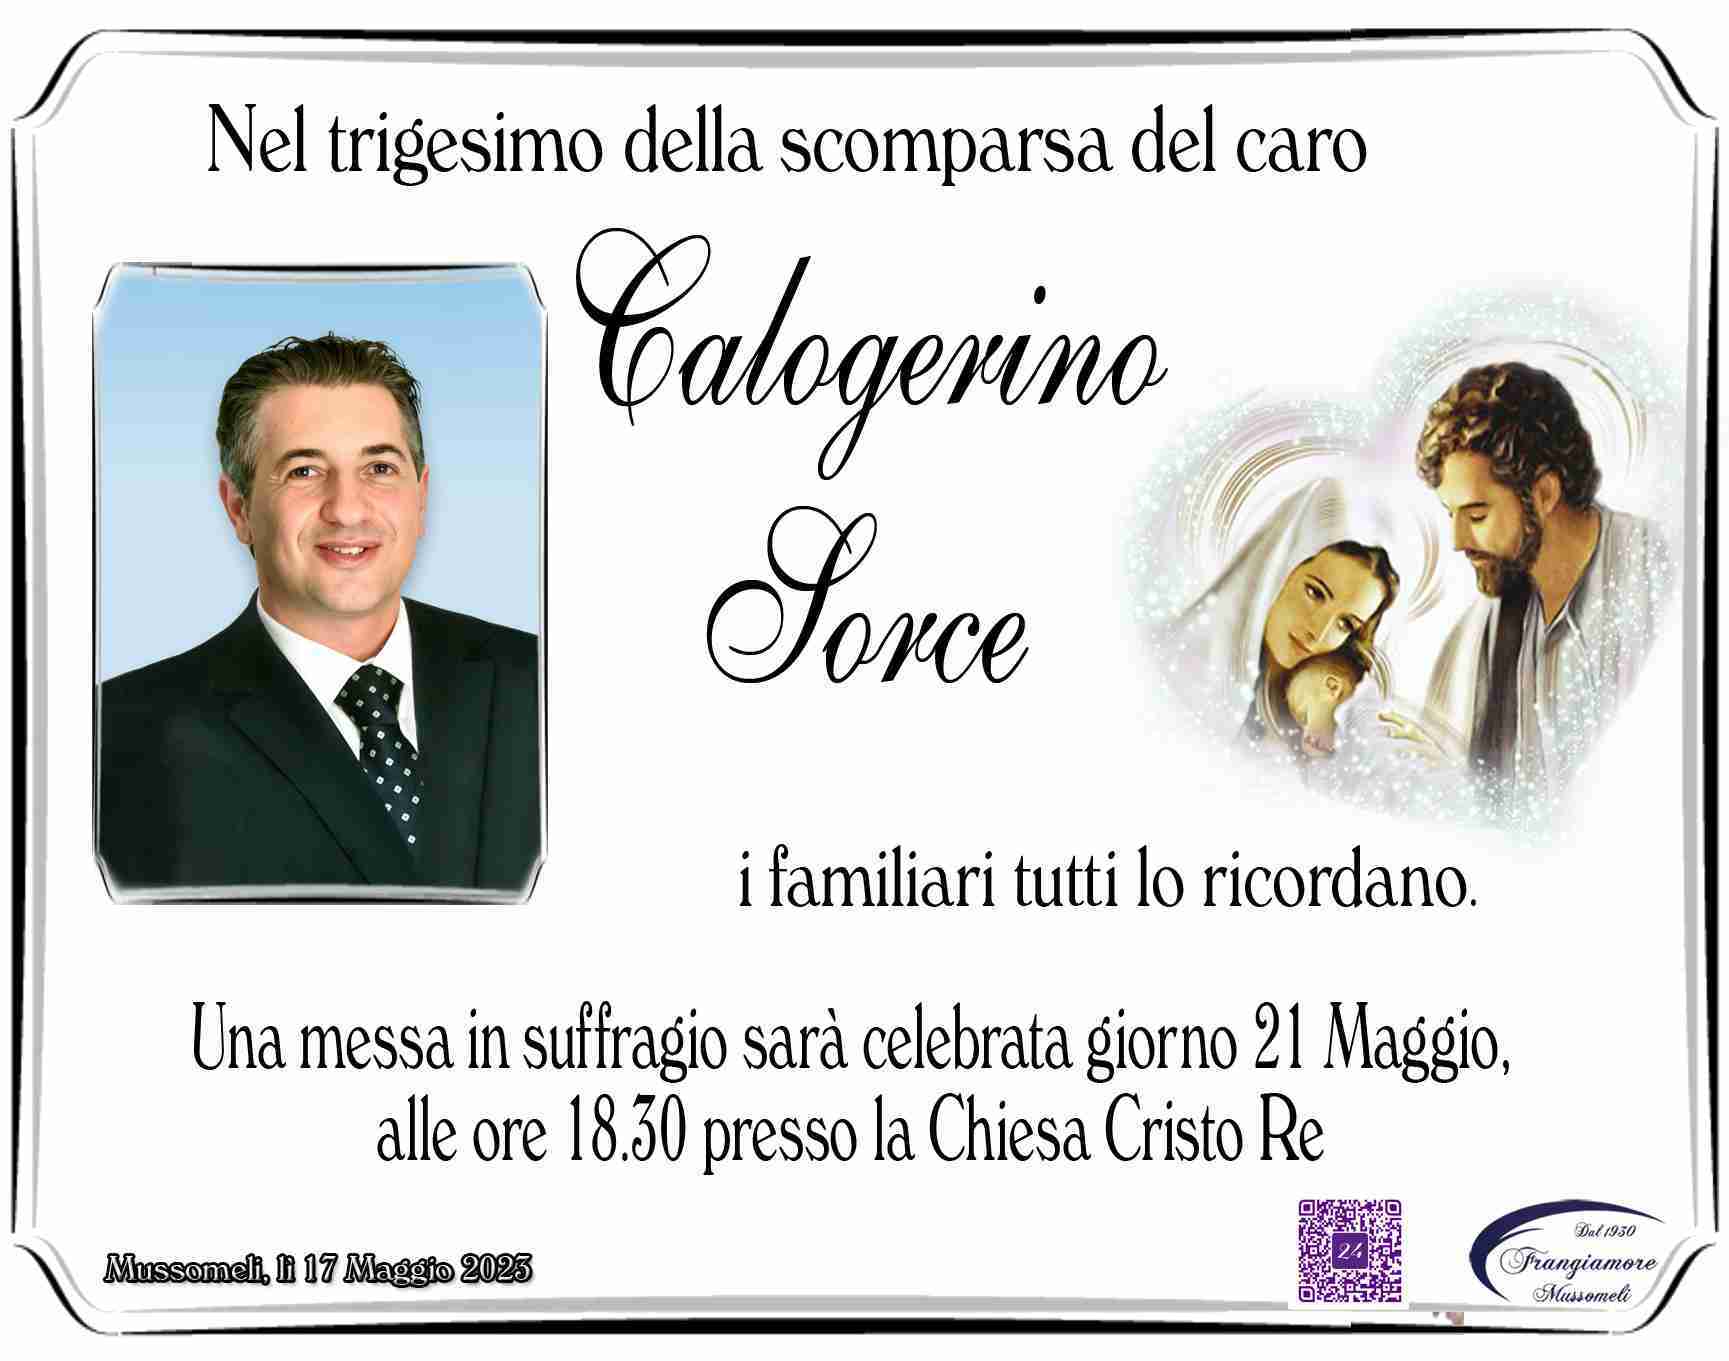 Calogerino Sorce